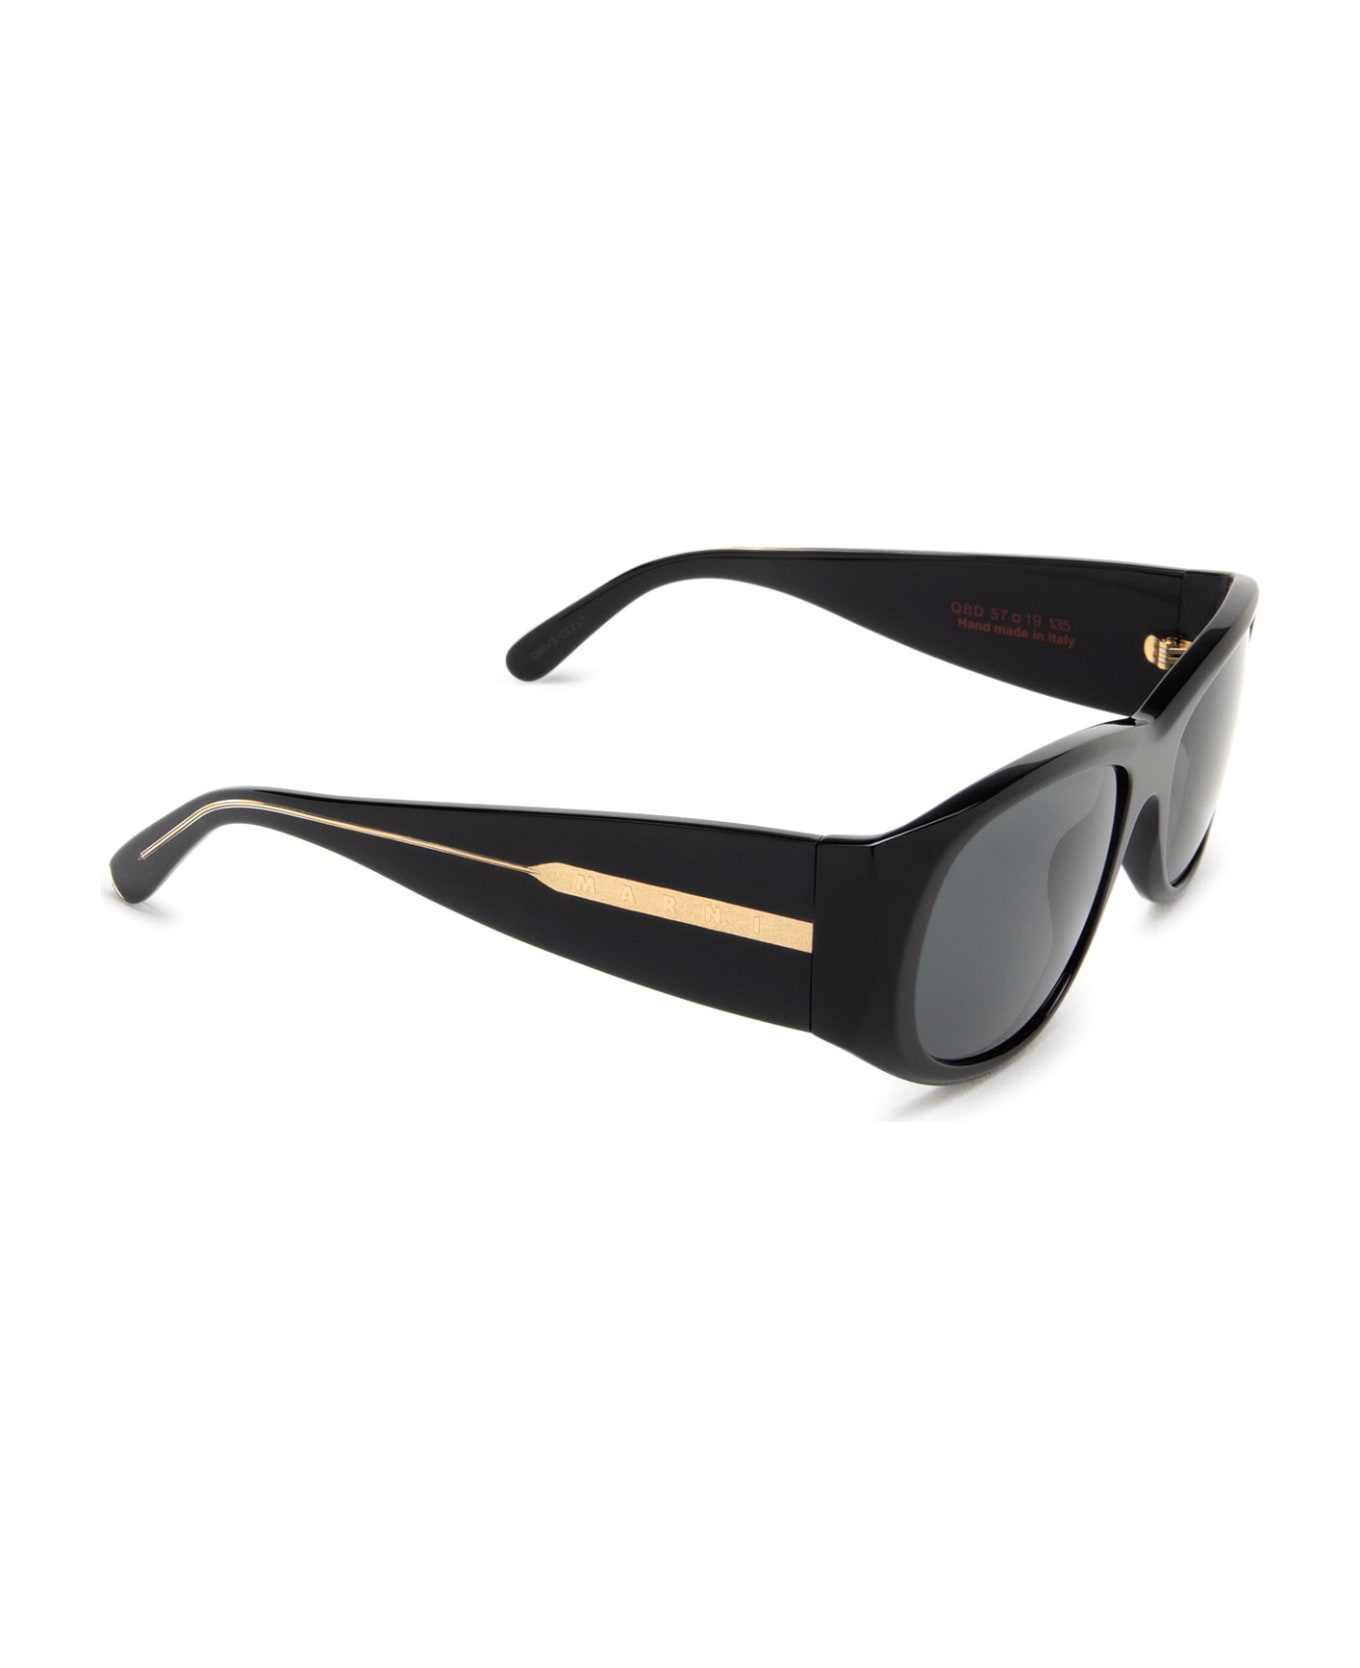 Marni Eyewear Orinoco River Black Sunglasses - Black